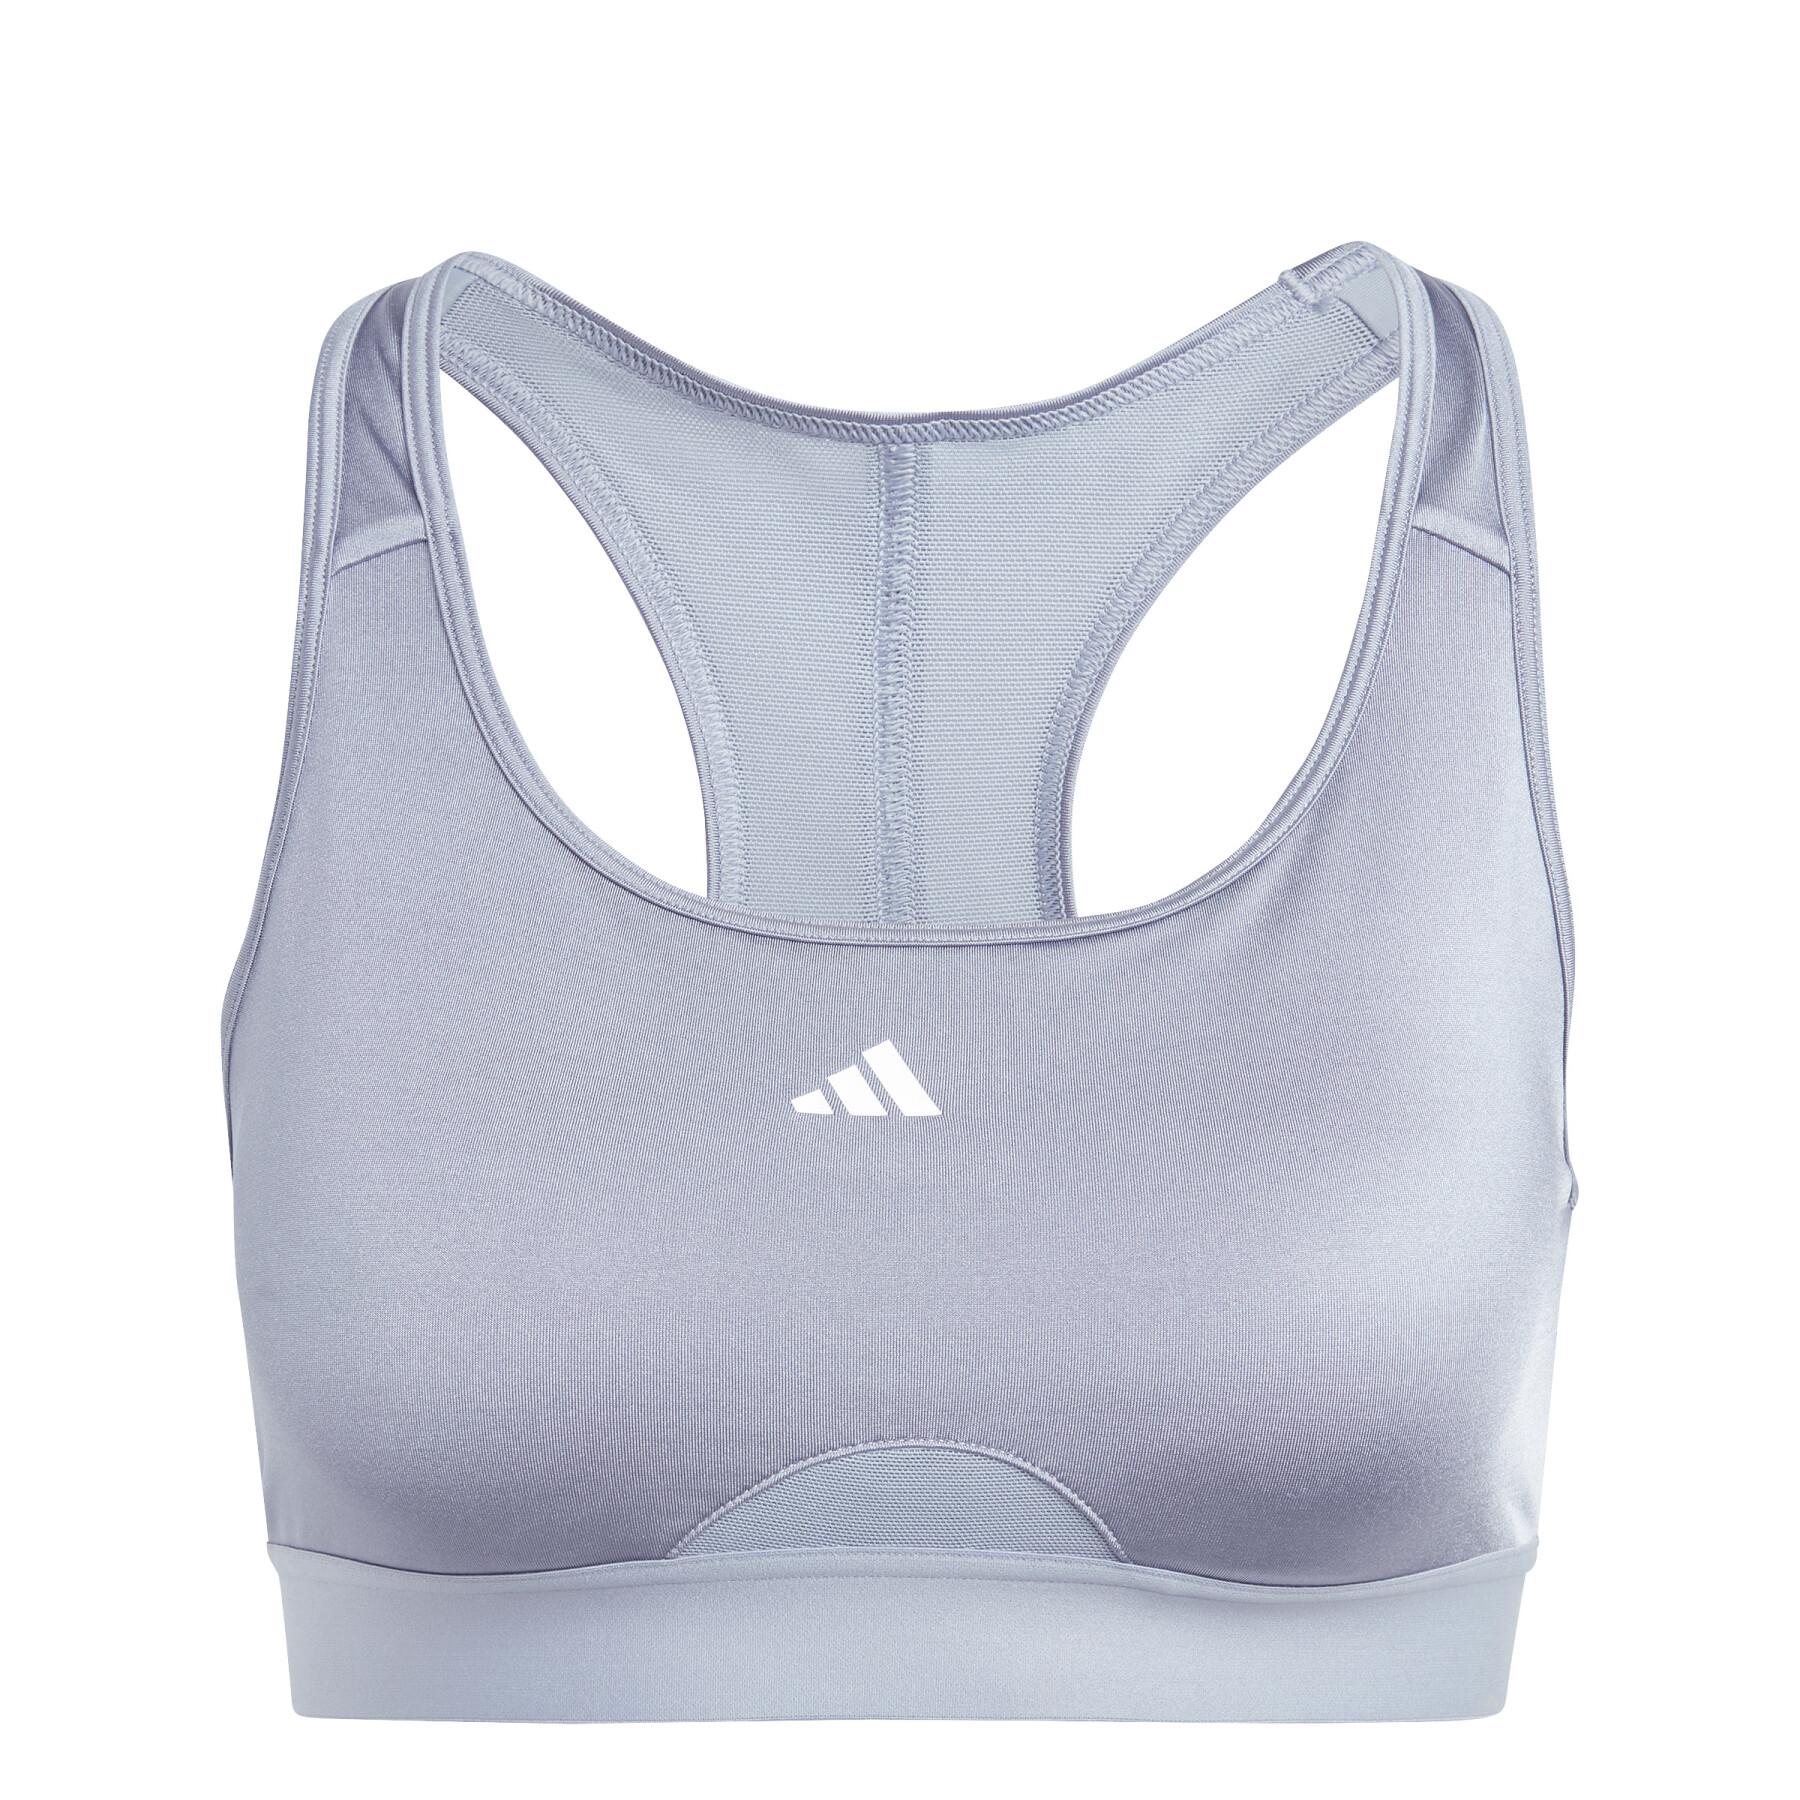 Medium support bra for women adidas PowerReact